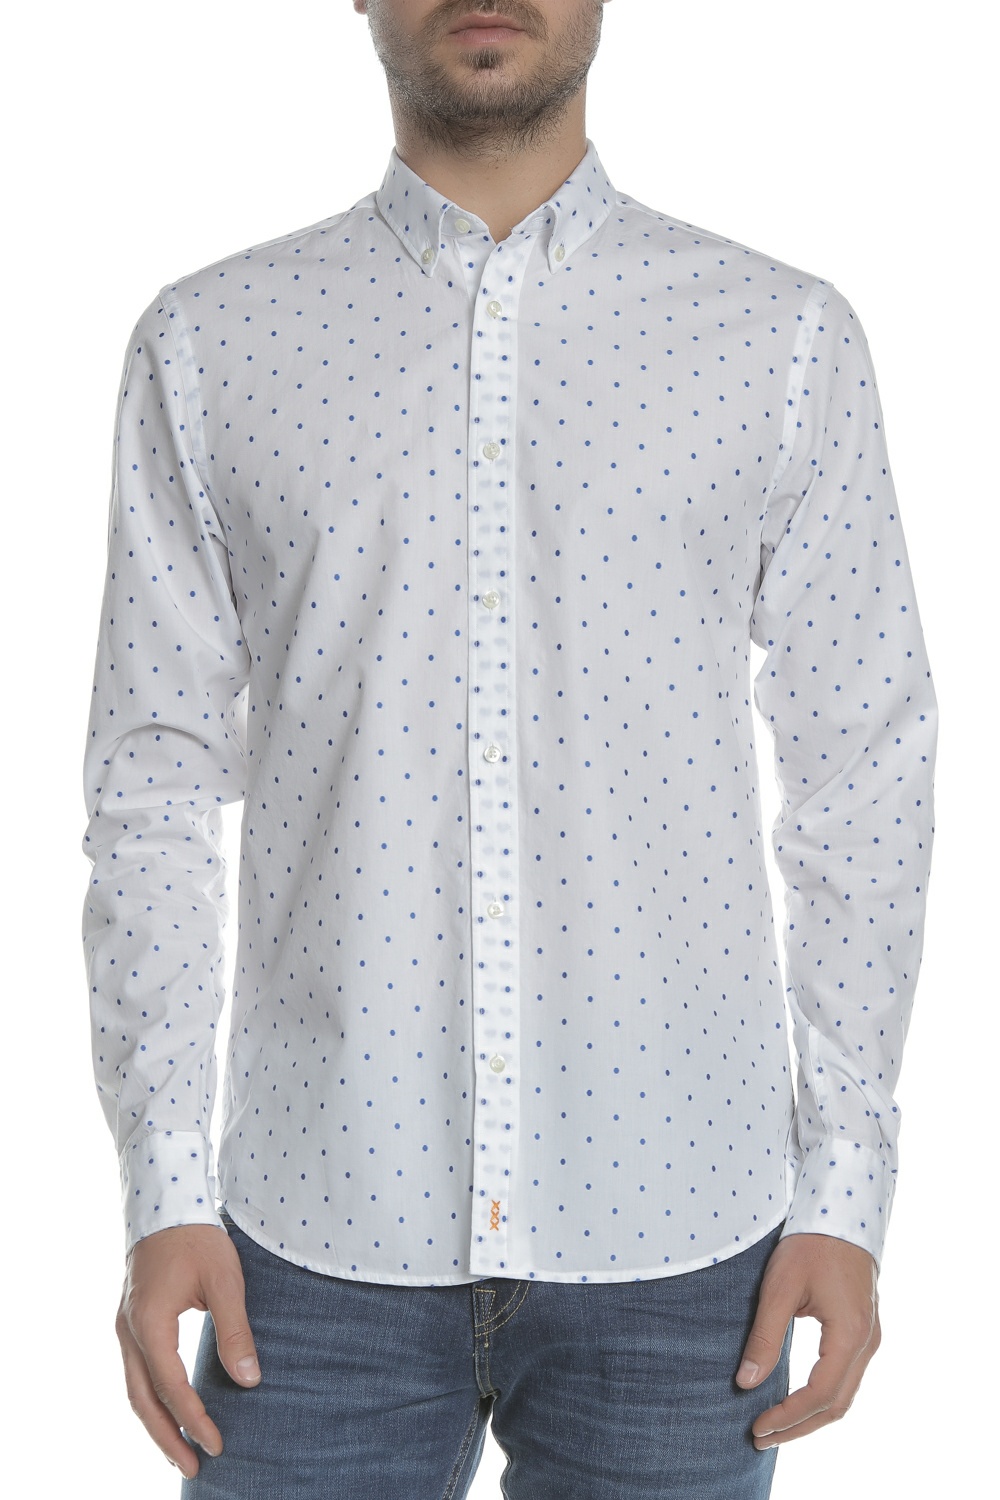 SCOTCH & SODA - Ανδρικό πουκάμισο REGULAR FIT - Fil-Coupι shirt λευκό Ανδρικά/Ρούχα/Πουκάμισα/Μακρυμάνικα